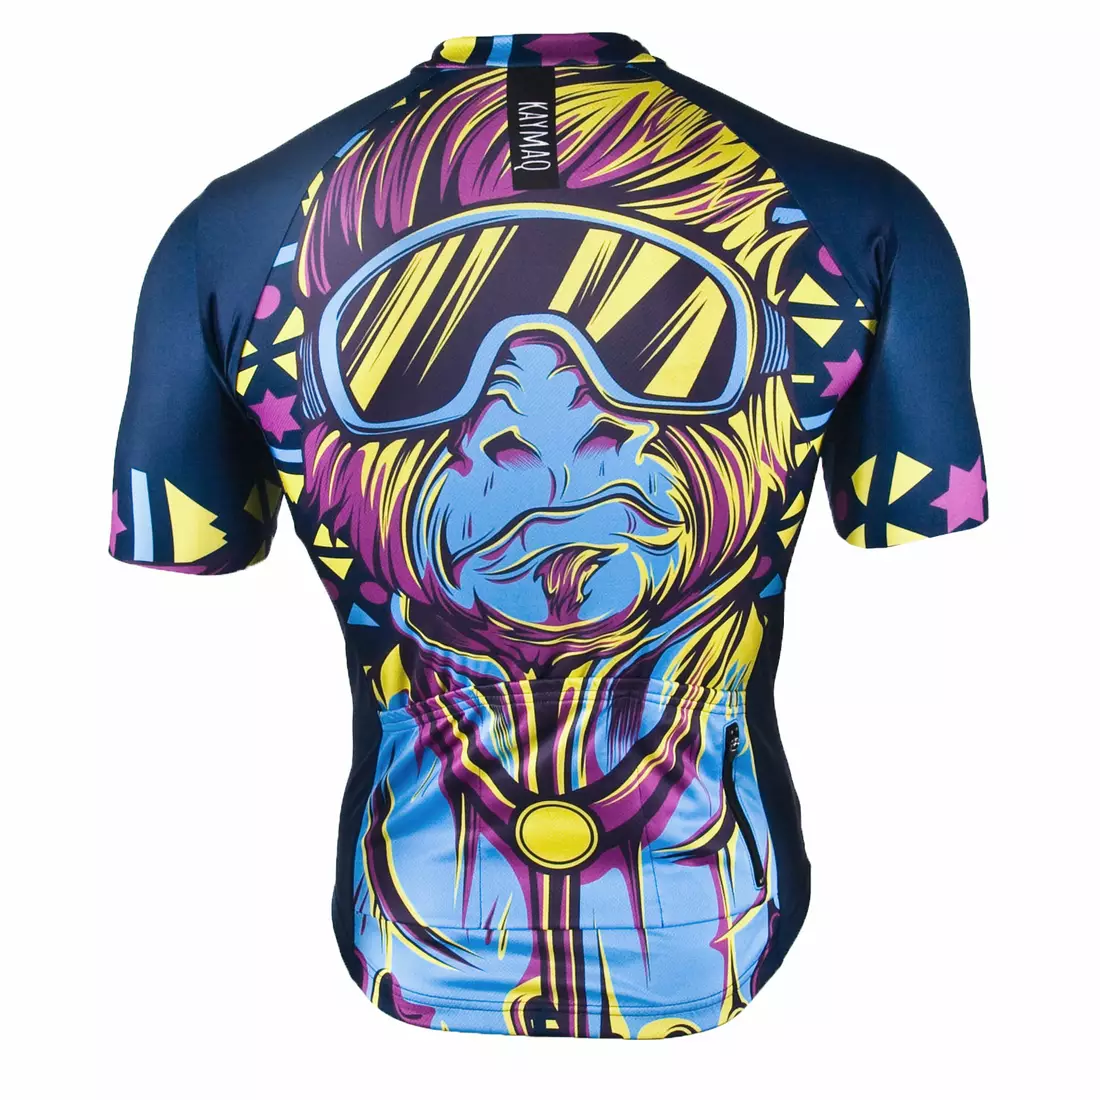 KAYMAQ M6 men's cycling short sleeve jersey